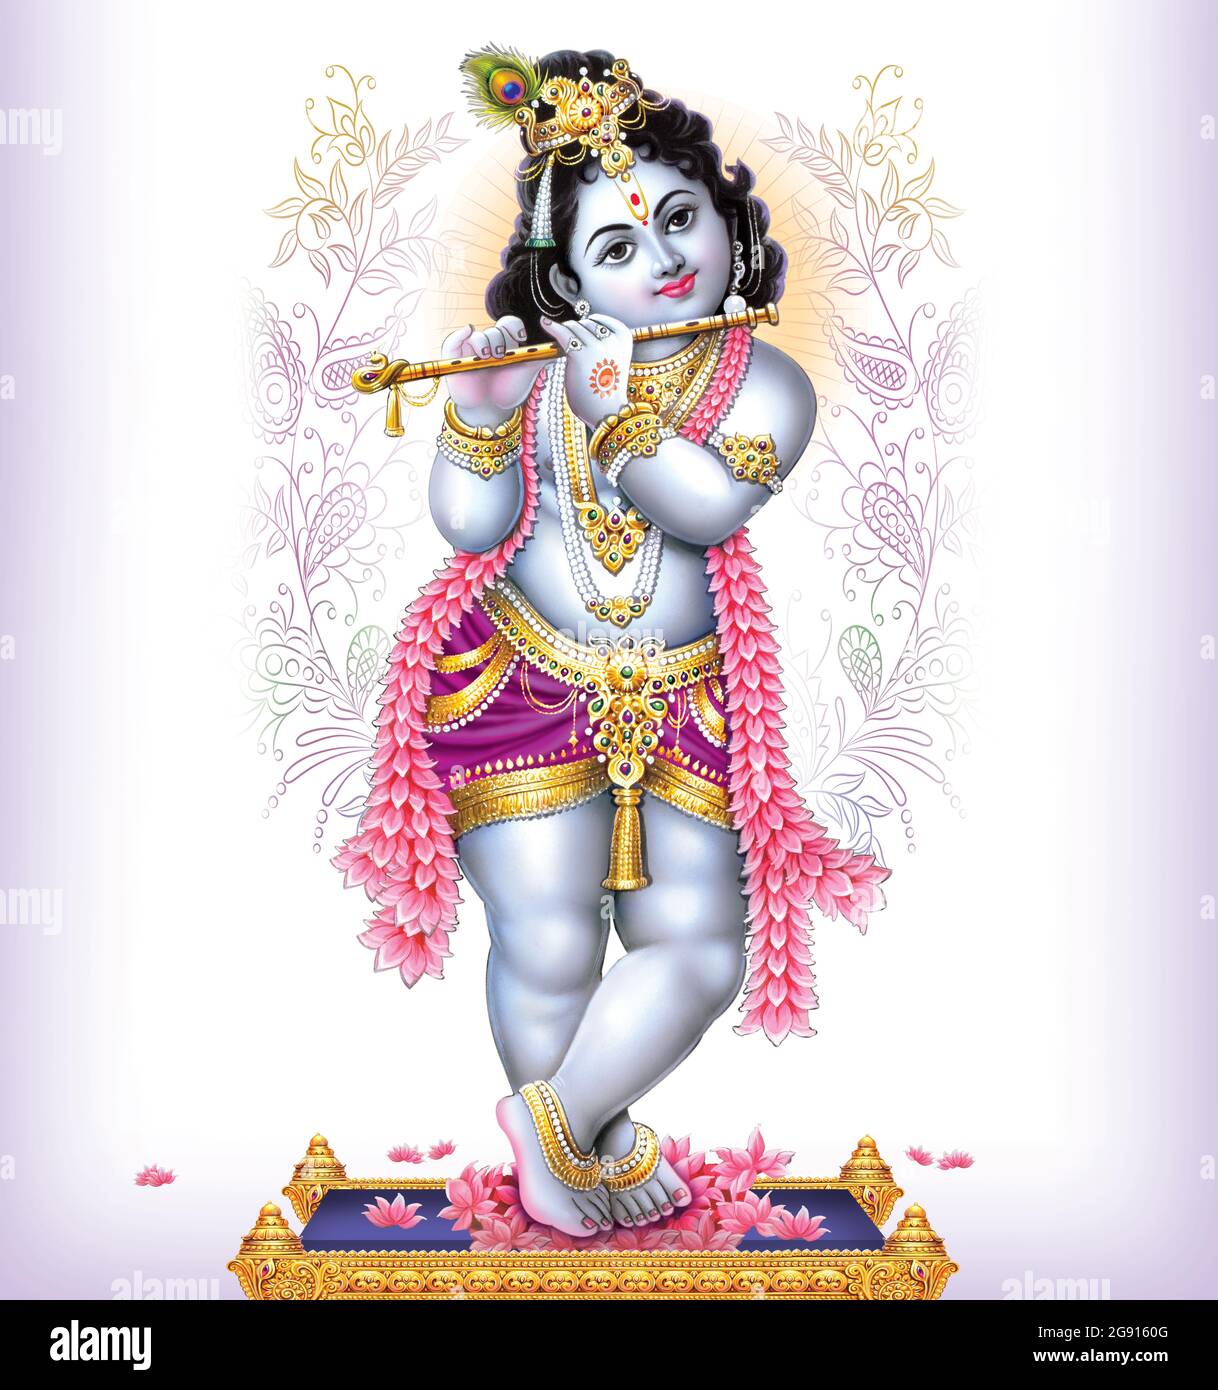 Indian God Lord Krishna High Resolution Illustration Stock Photo ...